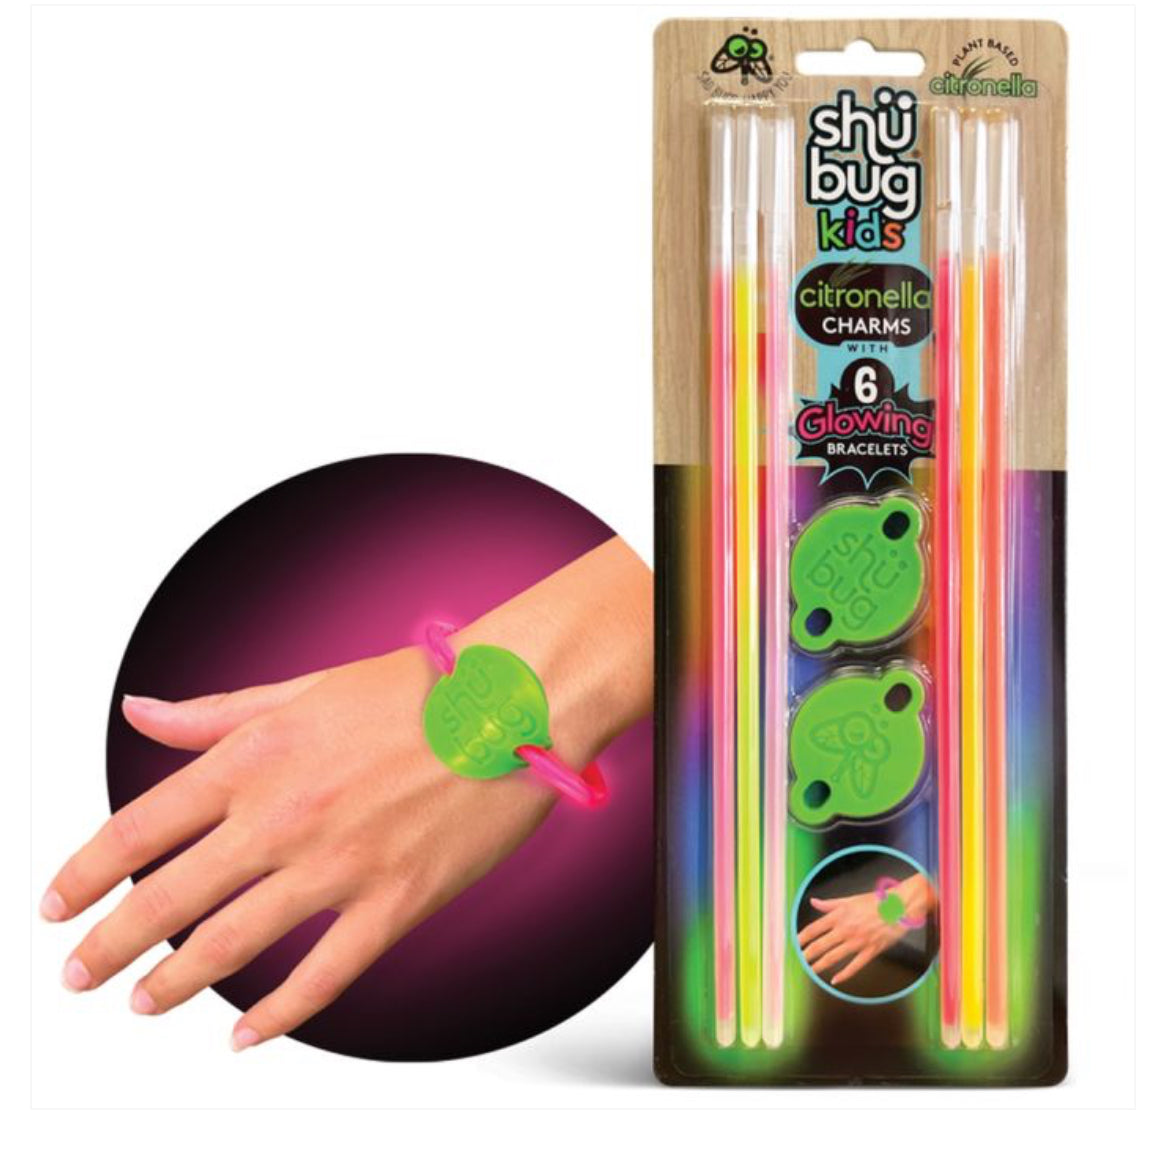 Shübug Kids Insect Repellent Glow Bracelets w/Charm